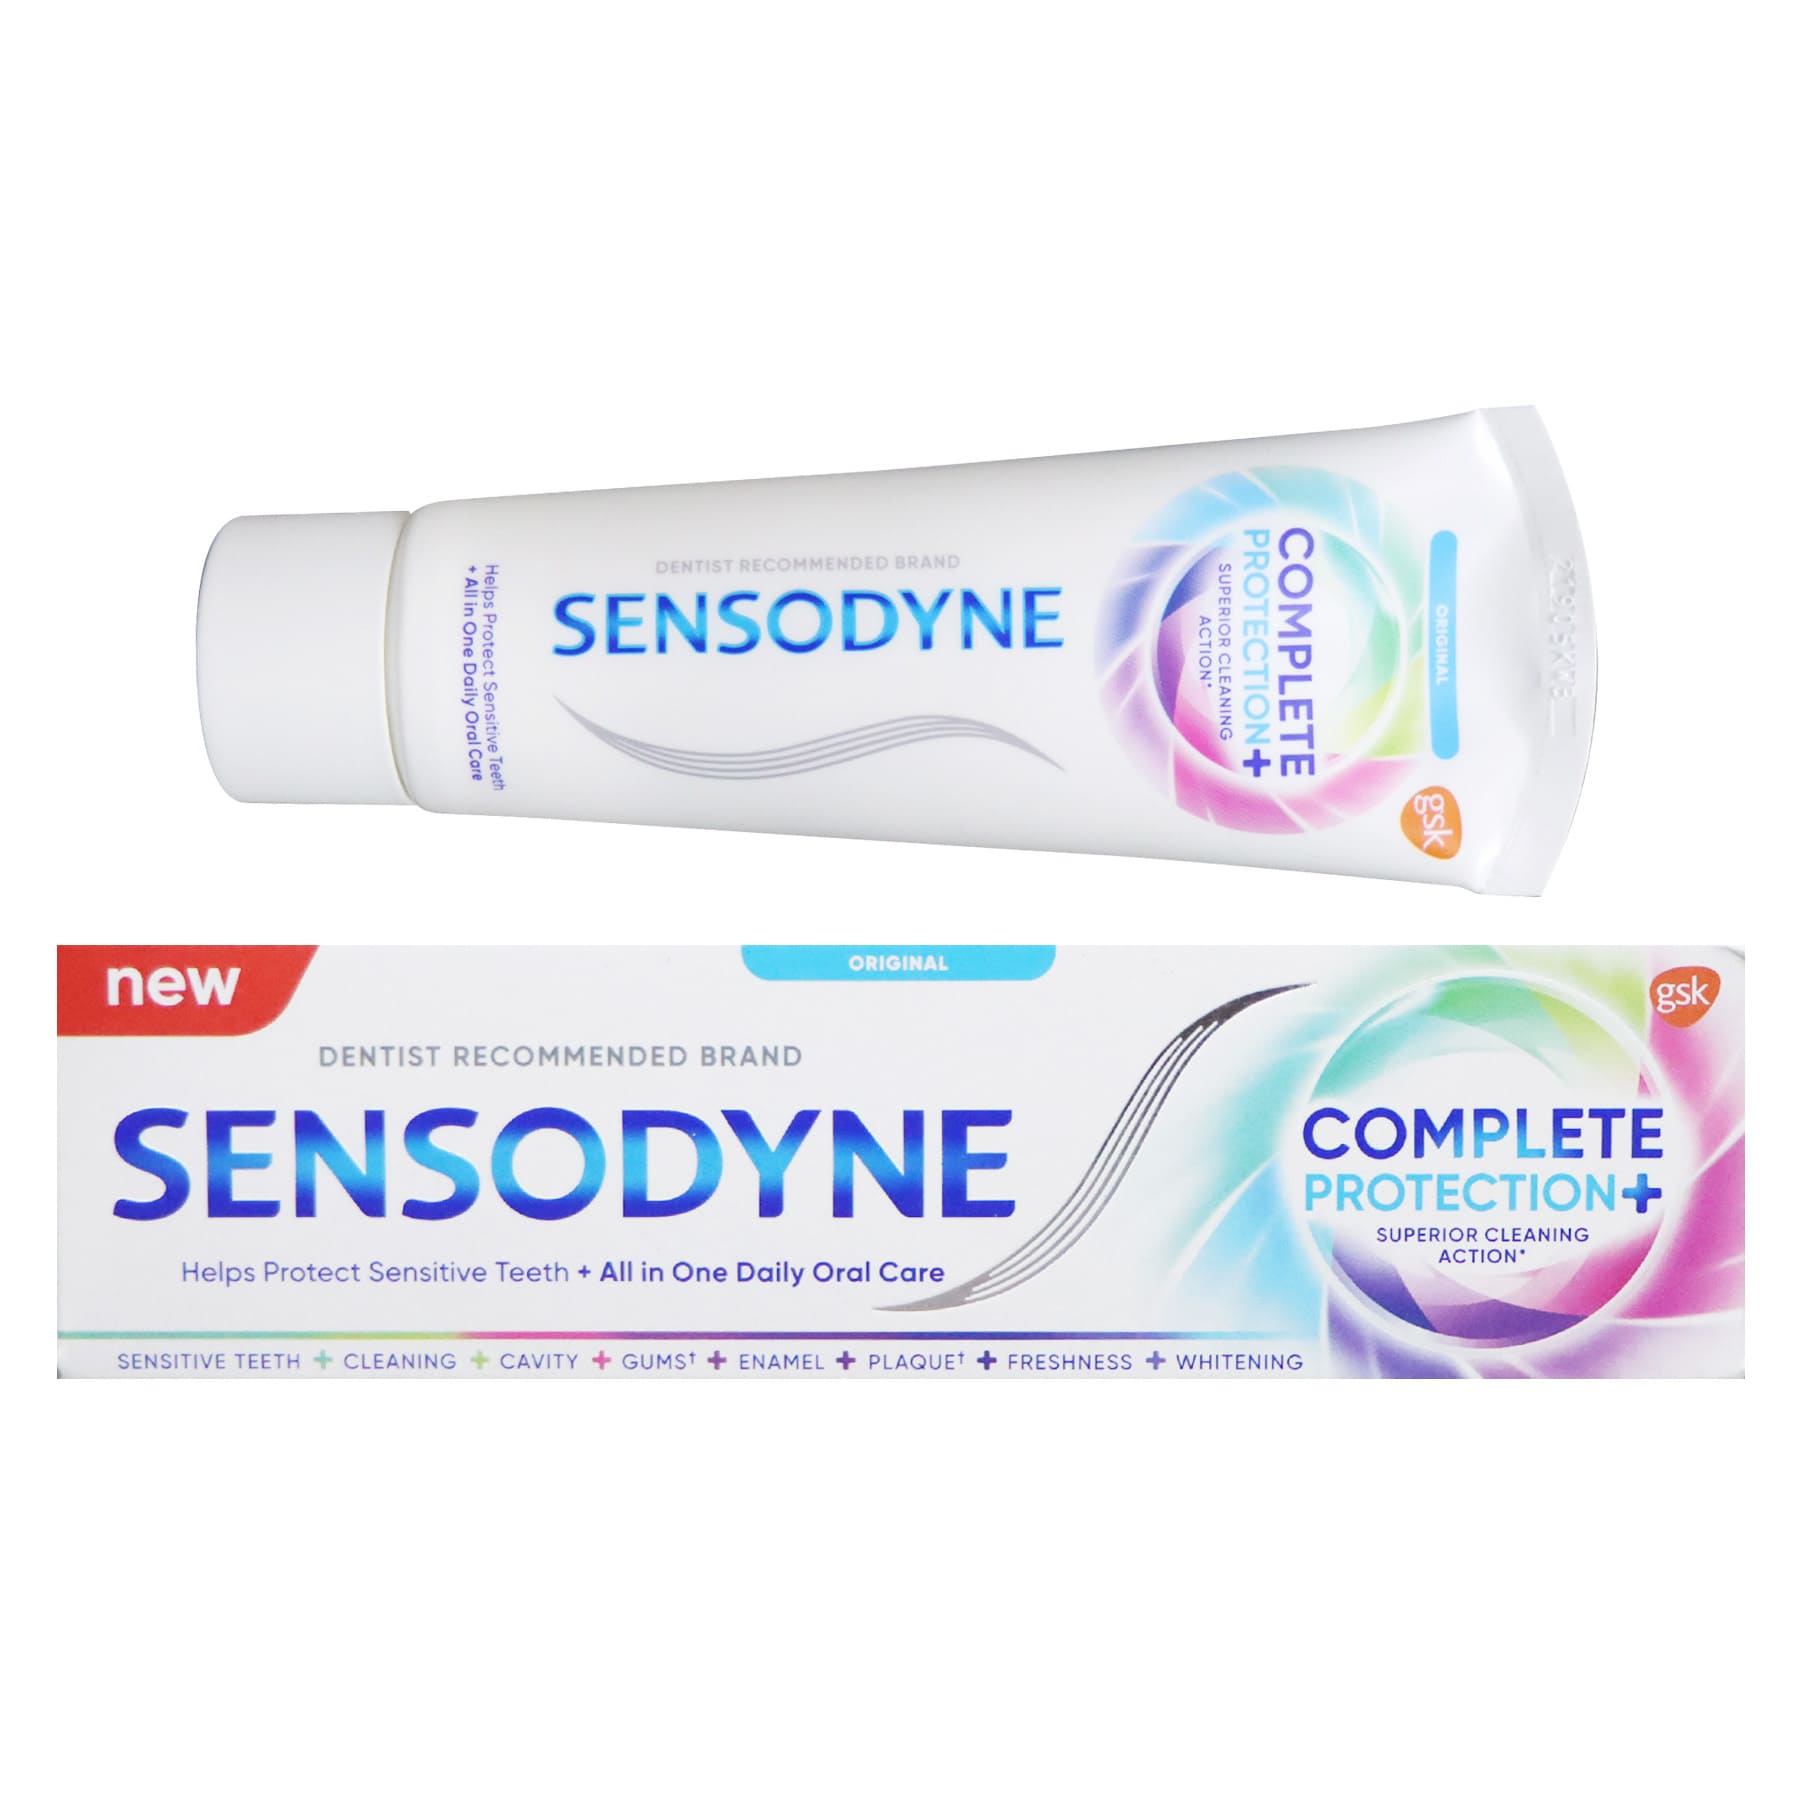 Sensodyne 舒適達 全方位防護抗敏牙膏 75毫升